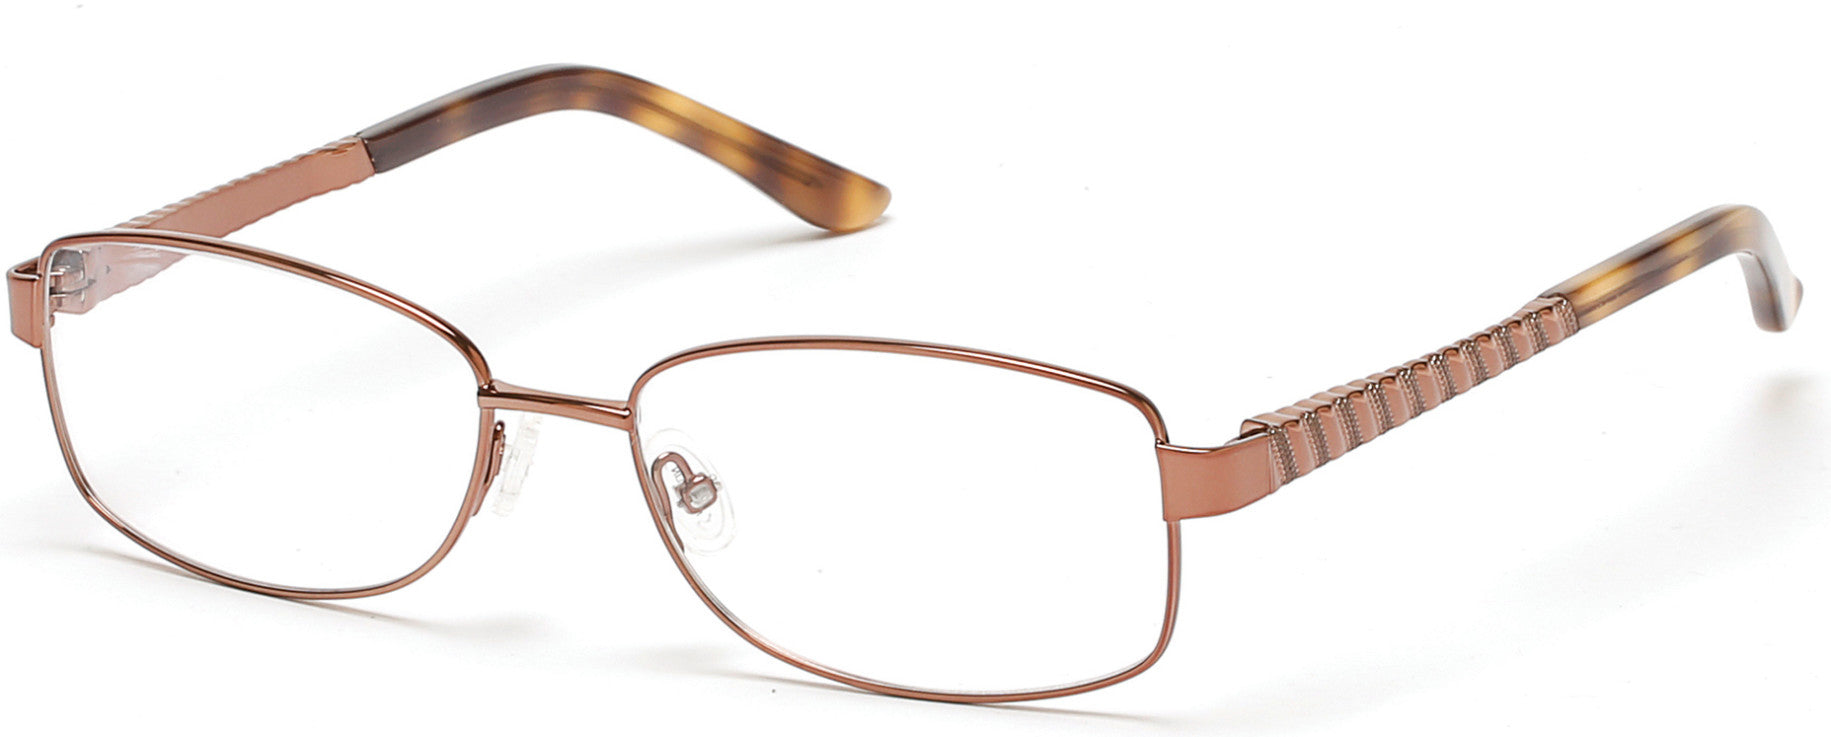 Marcolin MA5009 Eyeglasses 008-045 - Shiny Light Brown